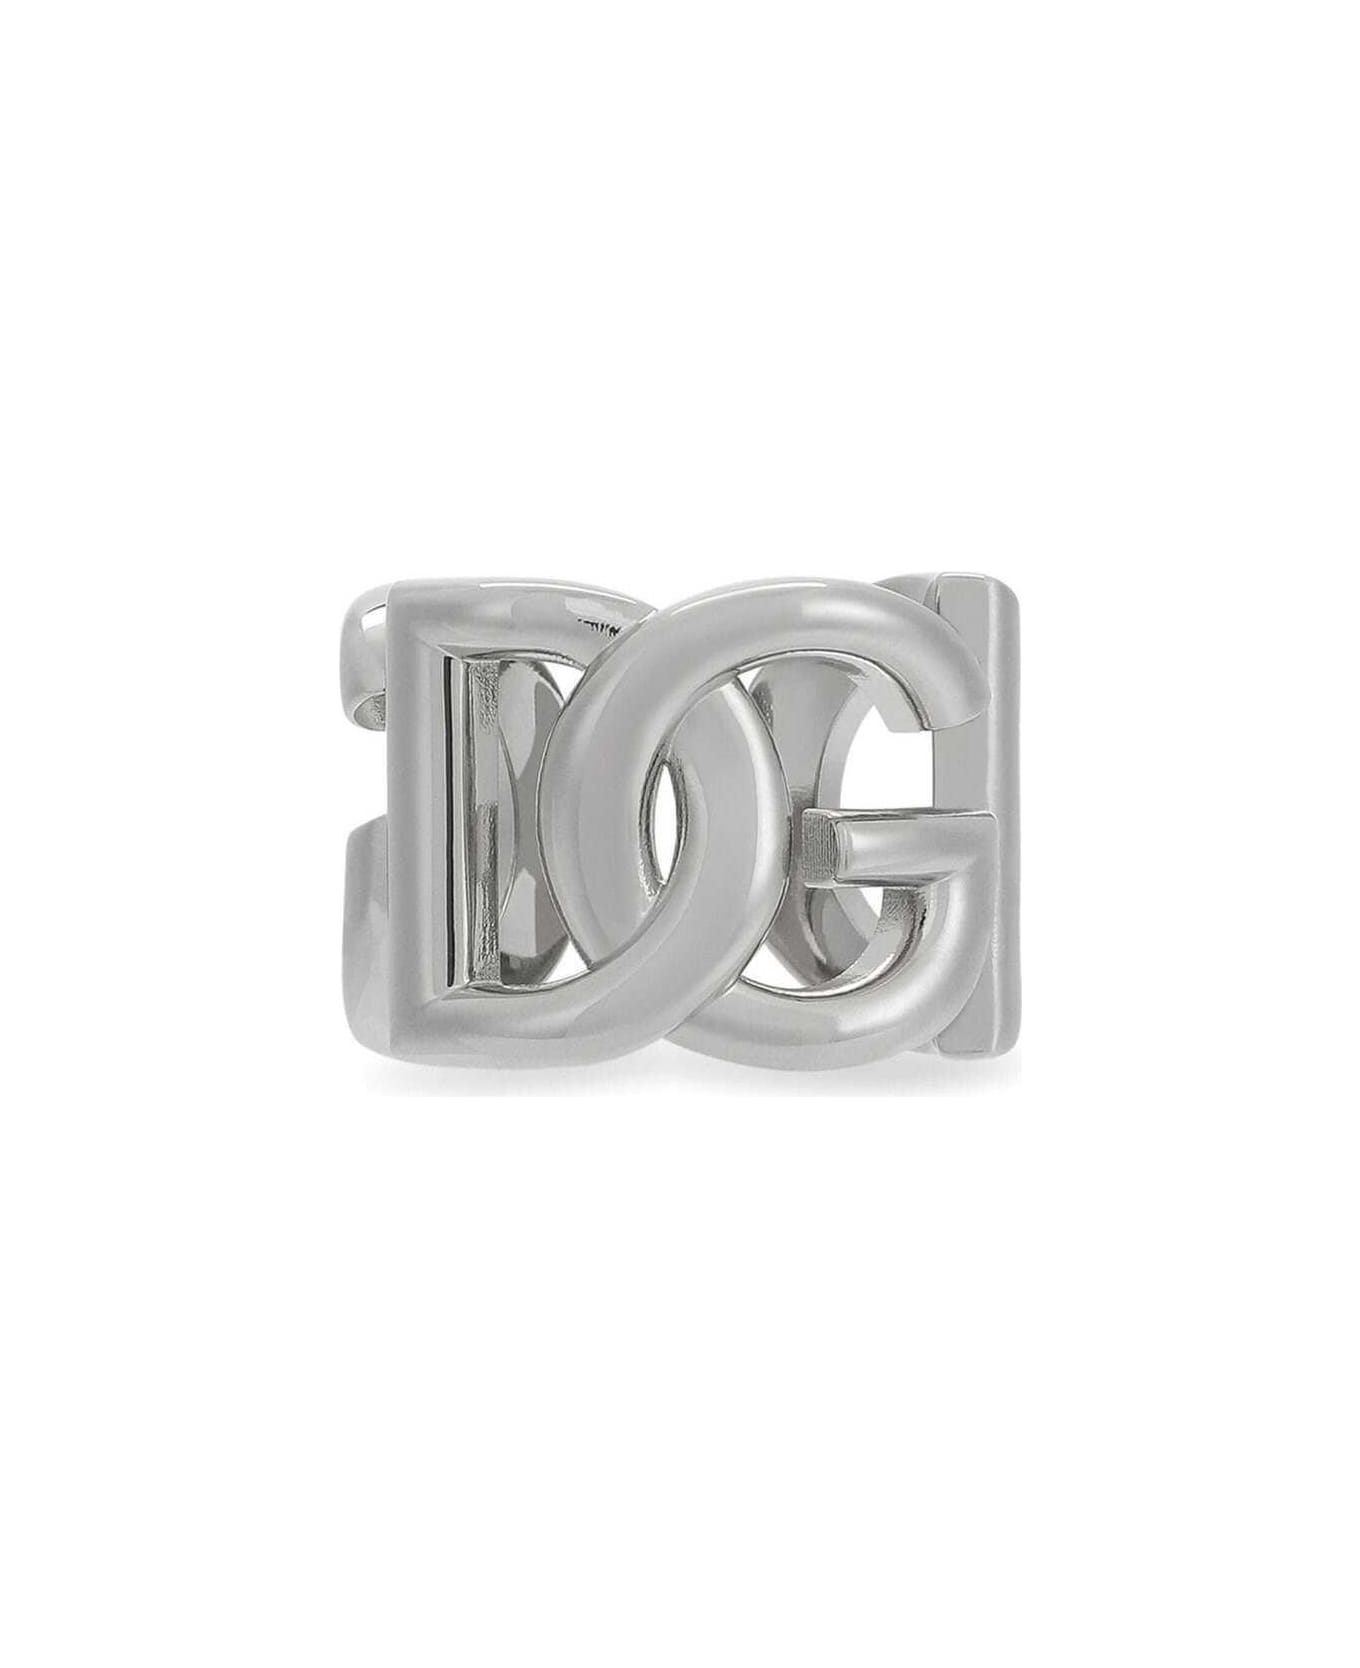 Dolce & Gabbana Dg Logo Ring - Argento palladio